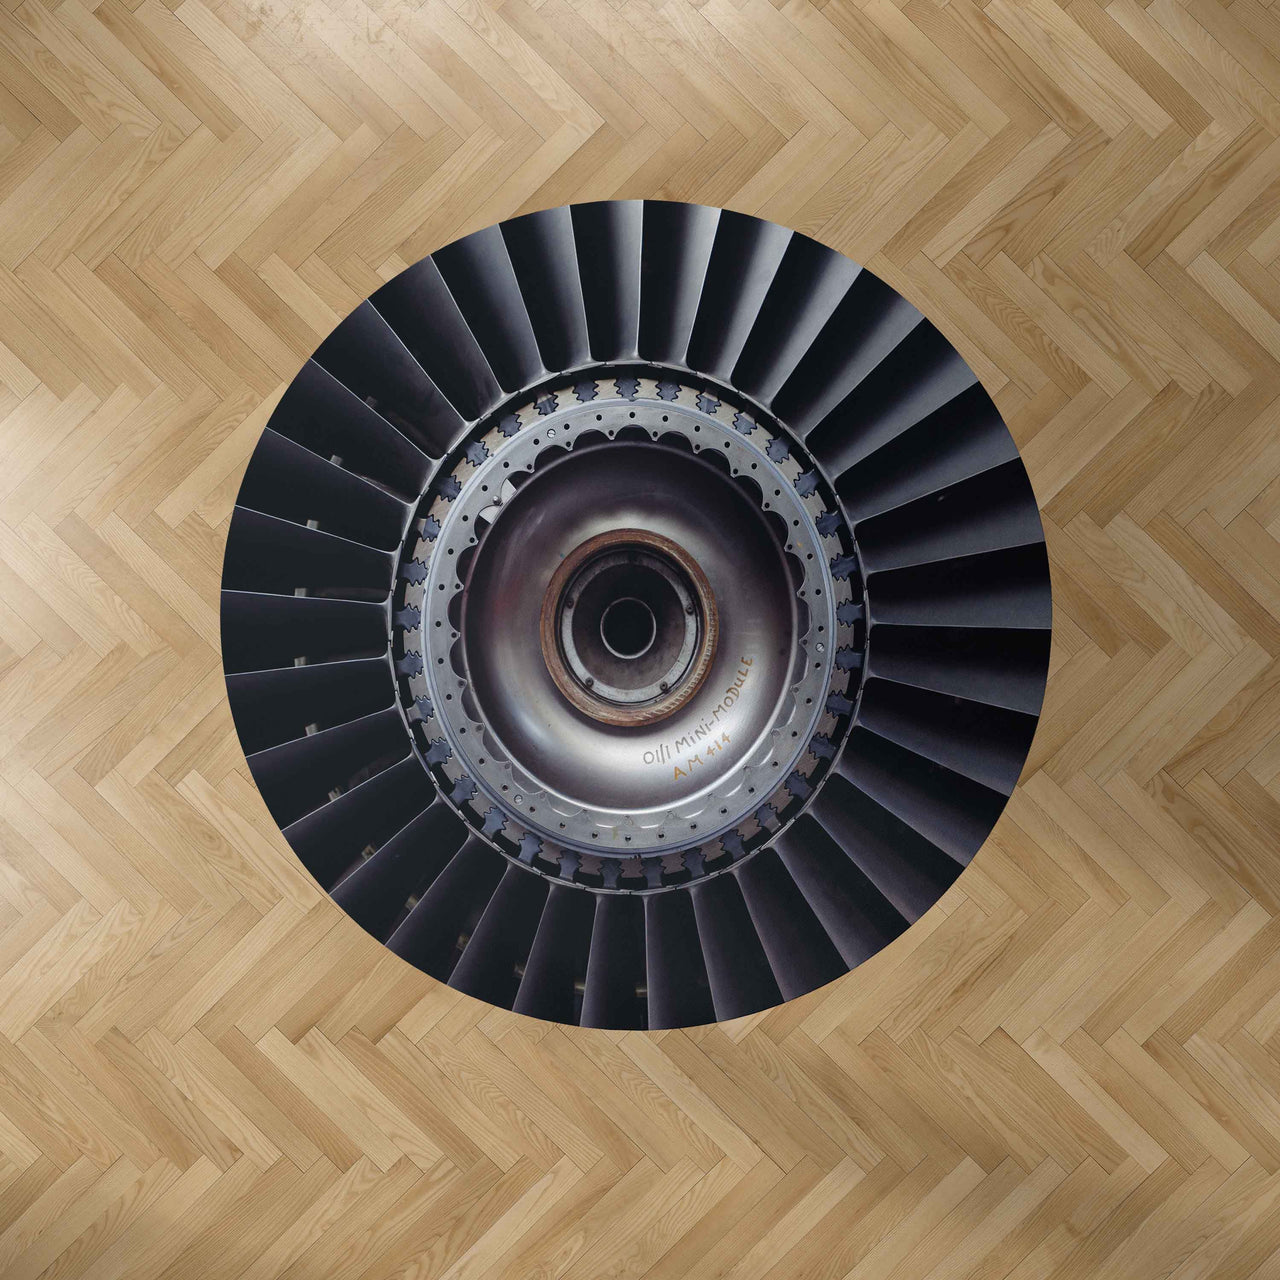 Real Jet Engine Designed Carpet & Floor Mats (Round)